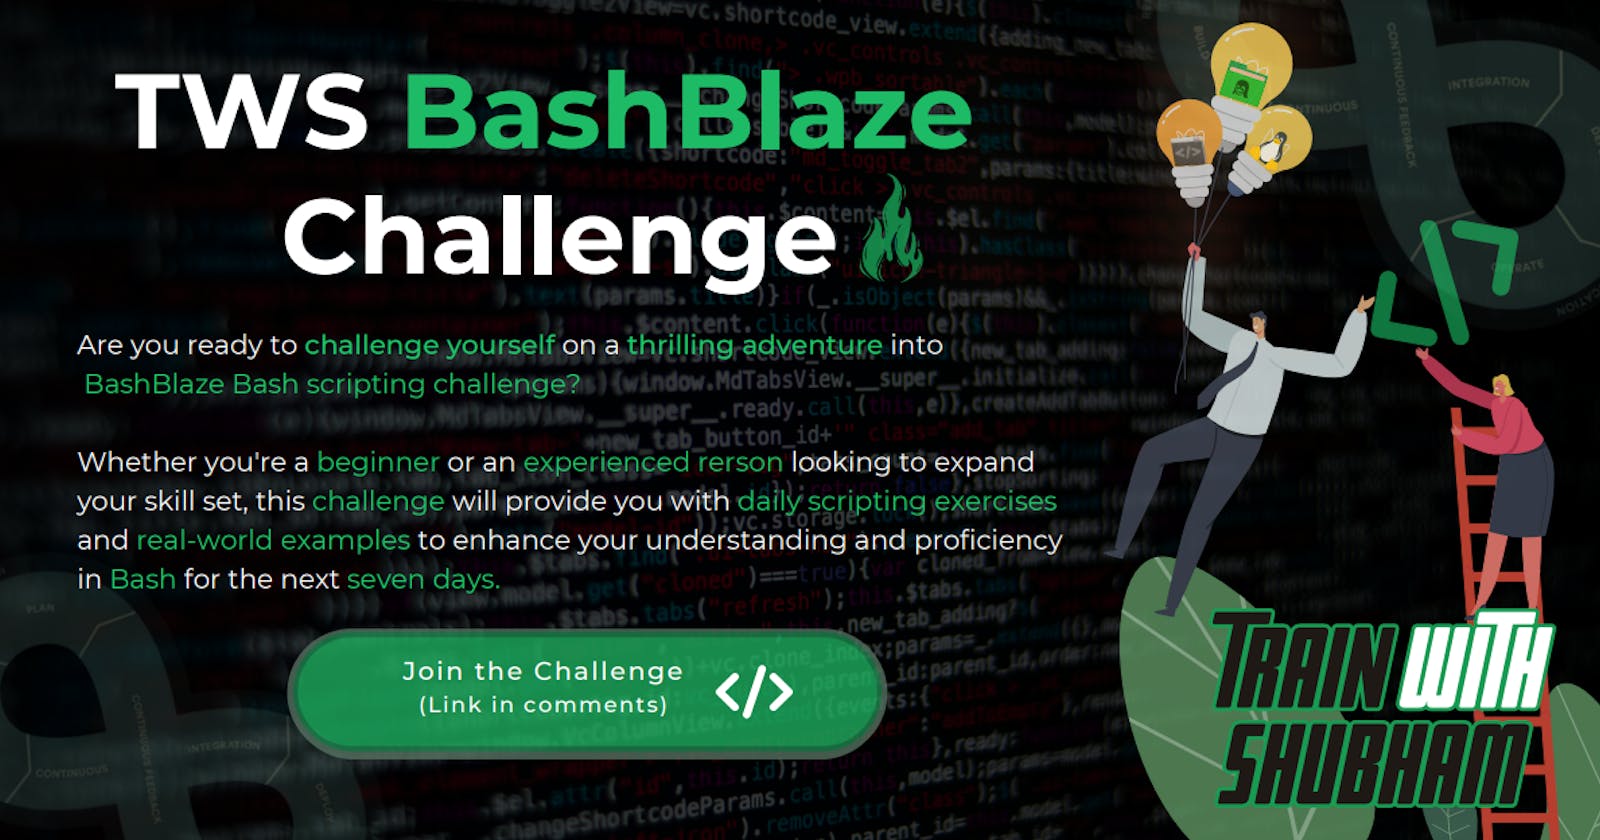 Day 1 of the Bash Scripting Challenge! 🚀 #TWSBashBlazeChallenge ✍️